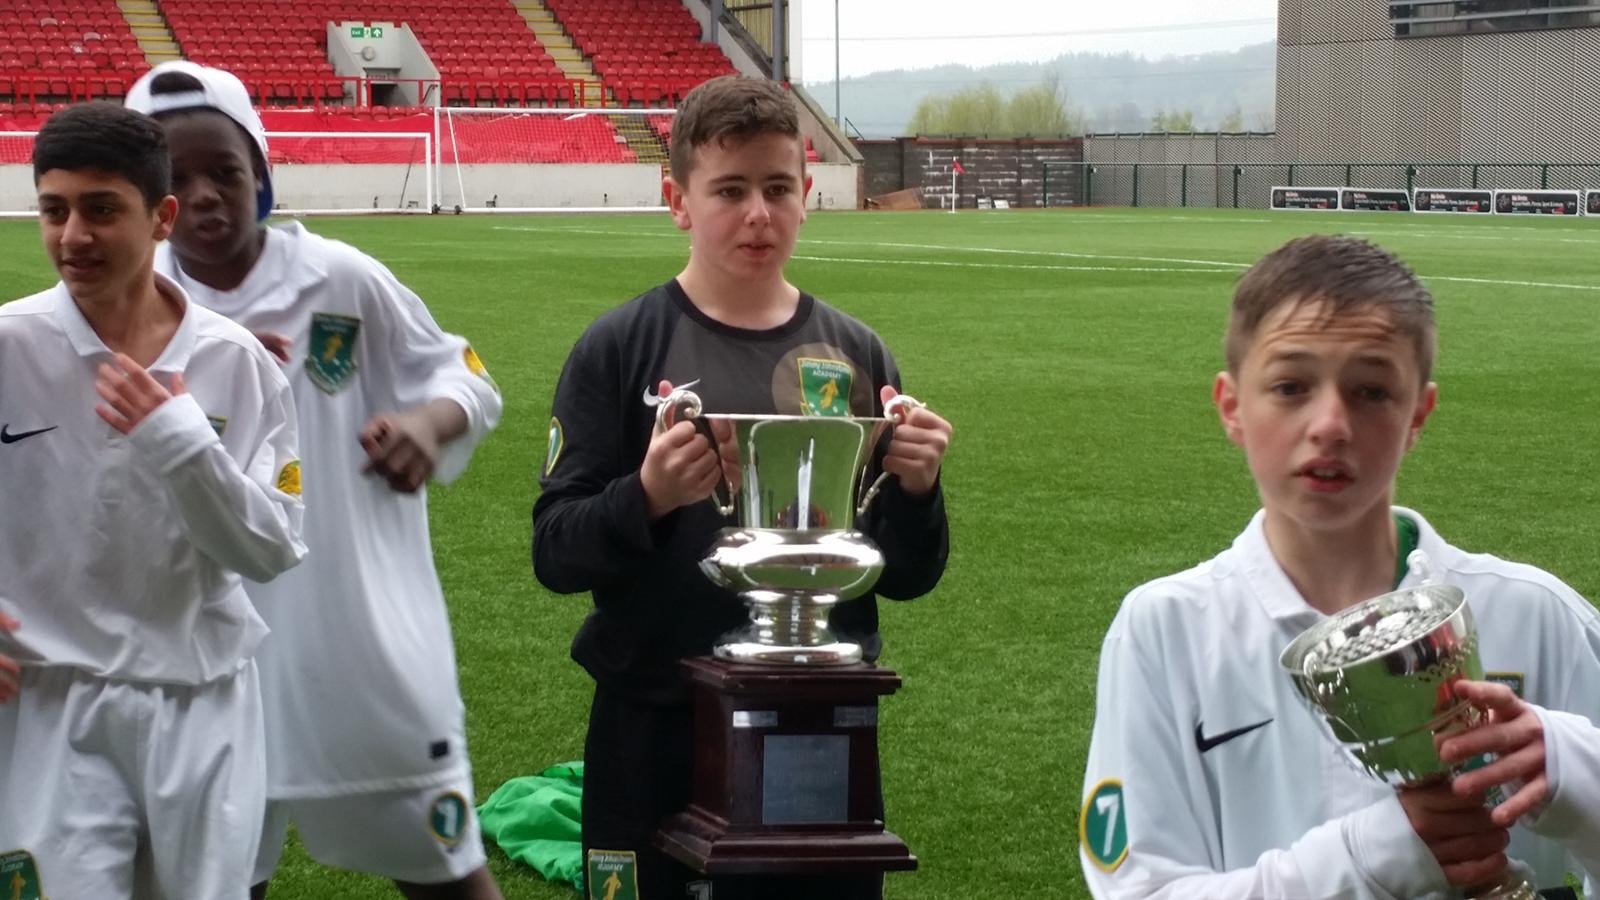 Liam winning a trophy